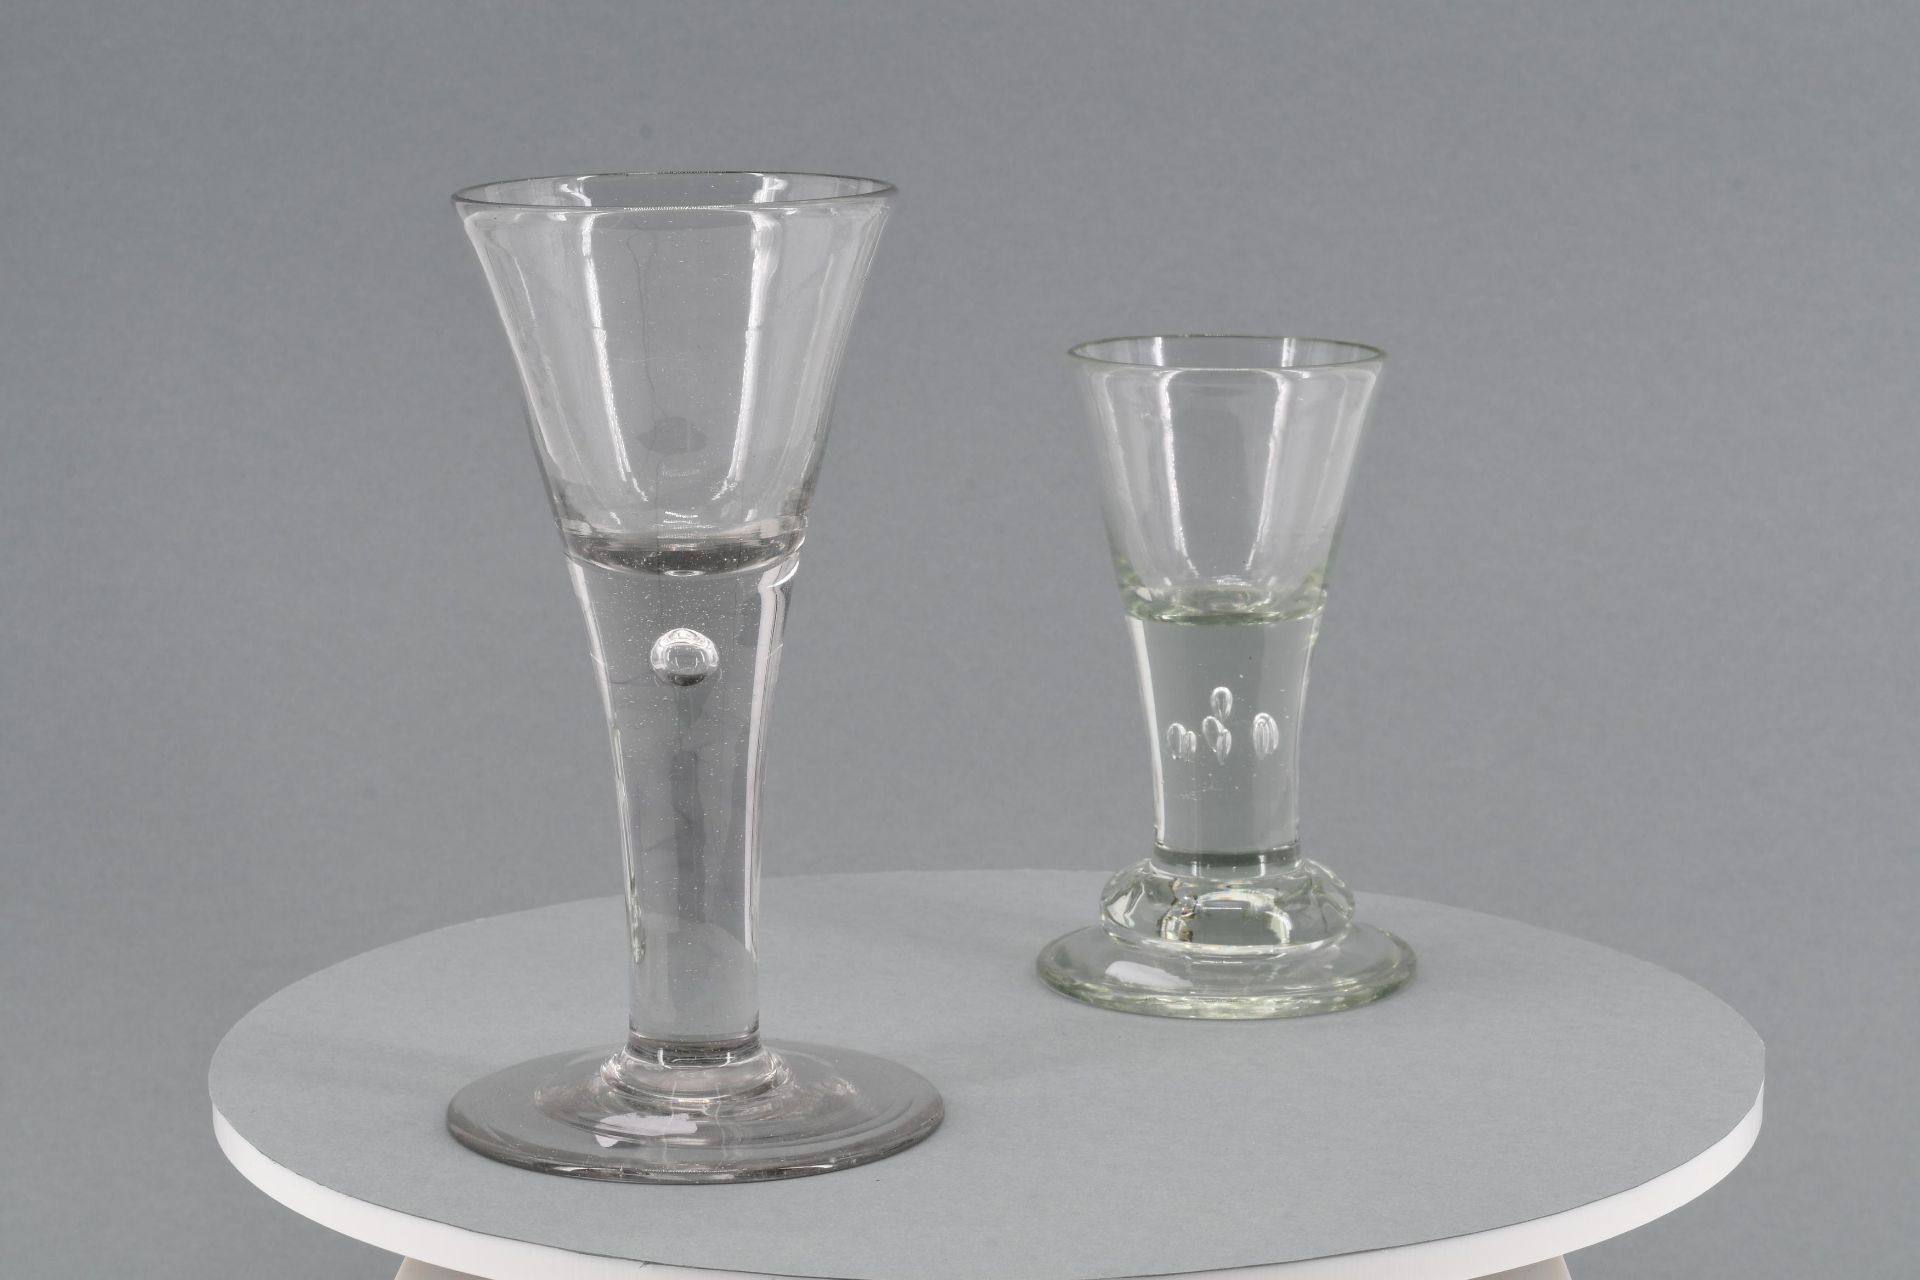 Two Lauenstein schnapps glasses - Image 2 of 6